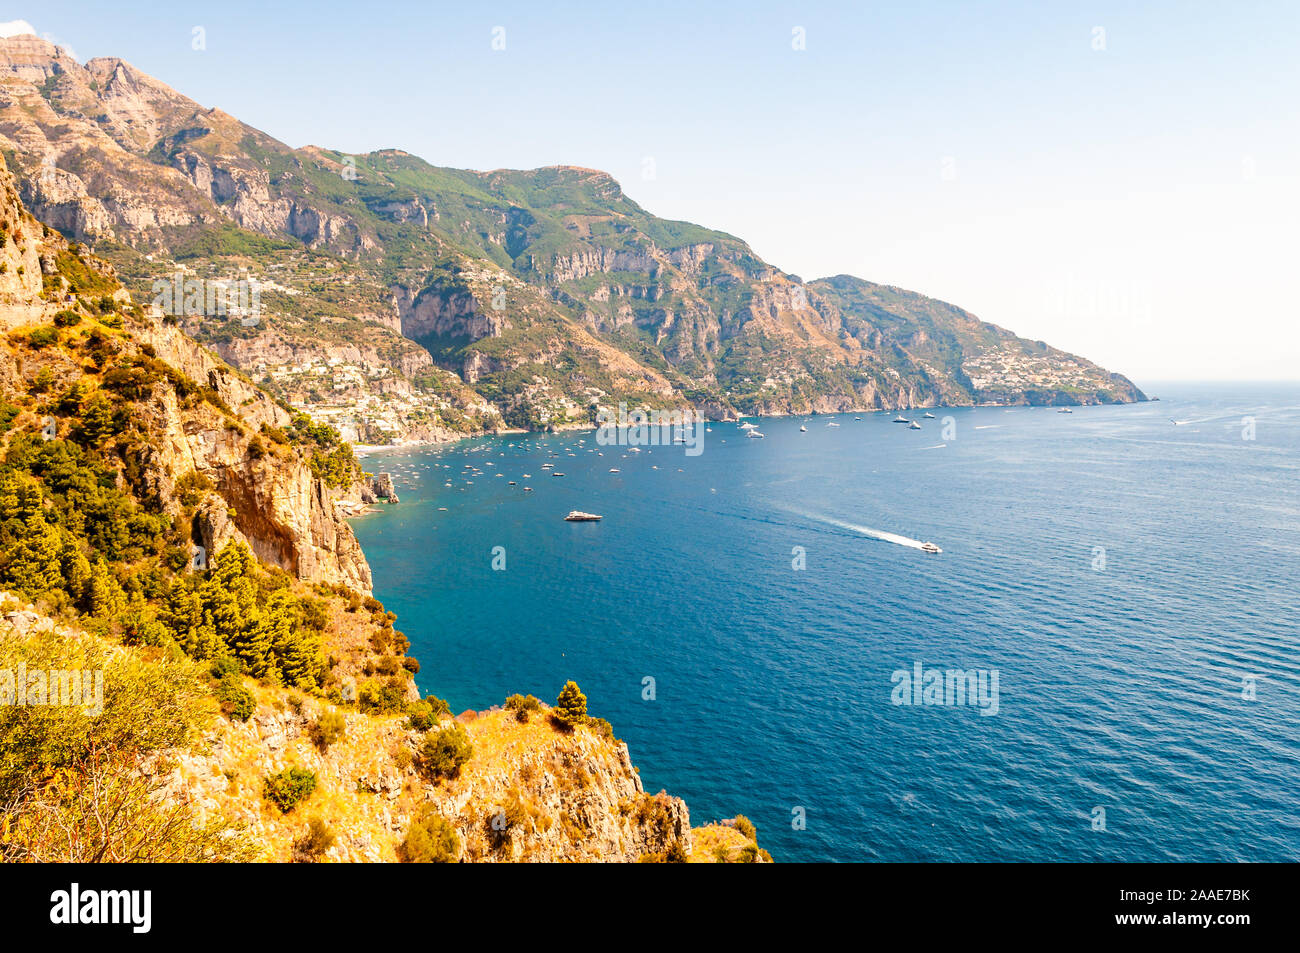 Beautiful scenic landscape of Positano, Italy. Rocky coastline full of boats and yachts traveling near high mountains. Cityscape of Positano surrounde Stock Photo